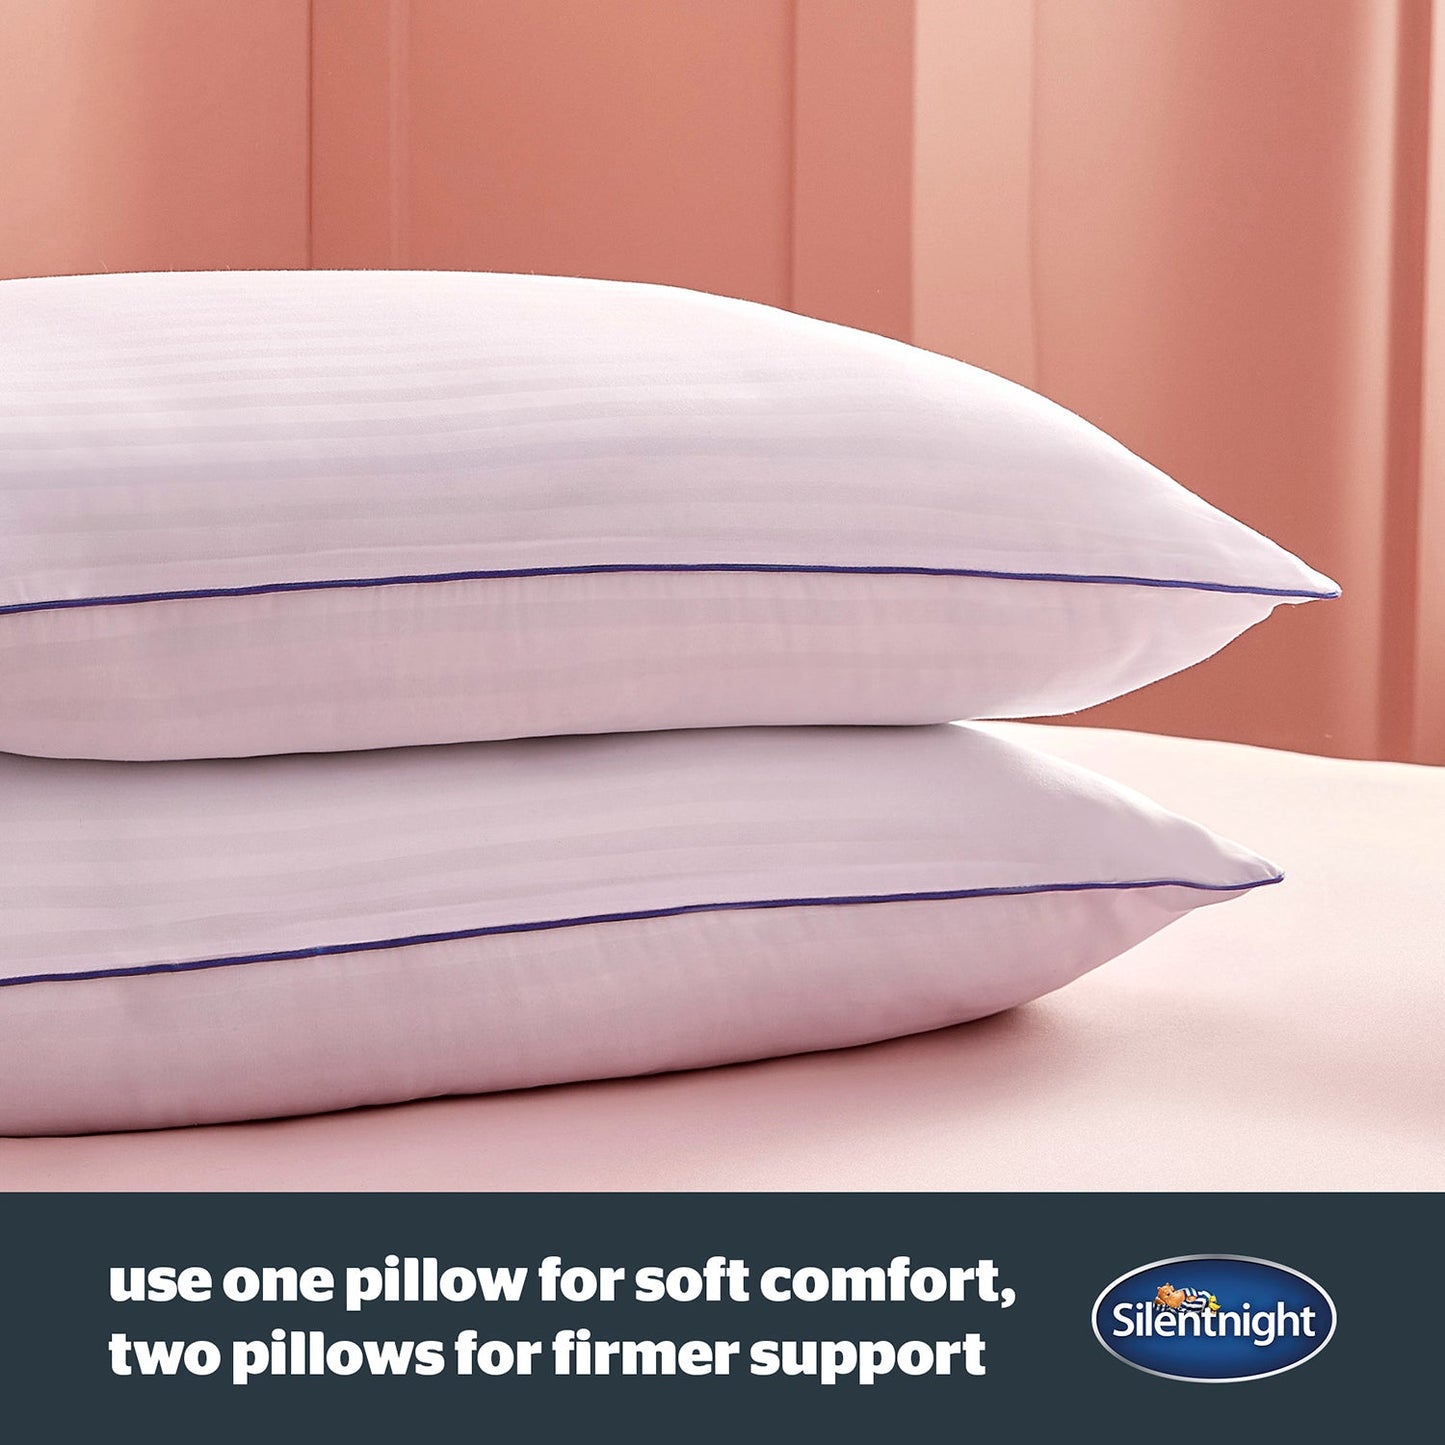 Silentnight Hotel Collection Pillow Pair - Soft/Medium Support